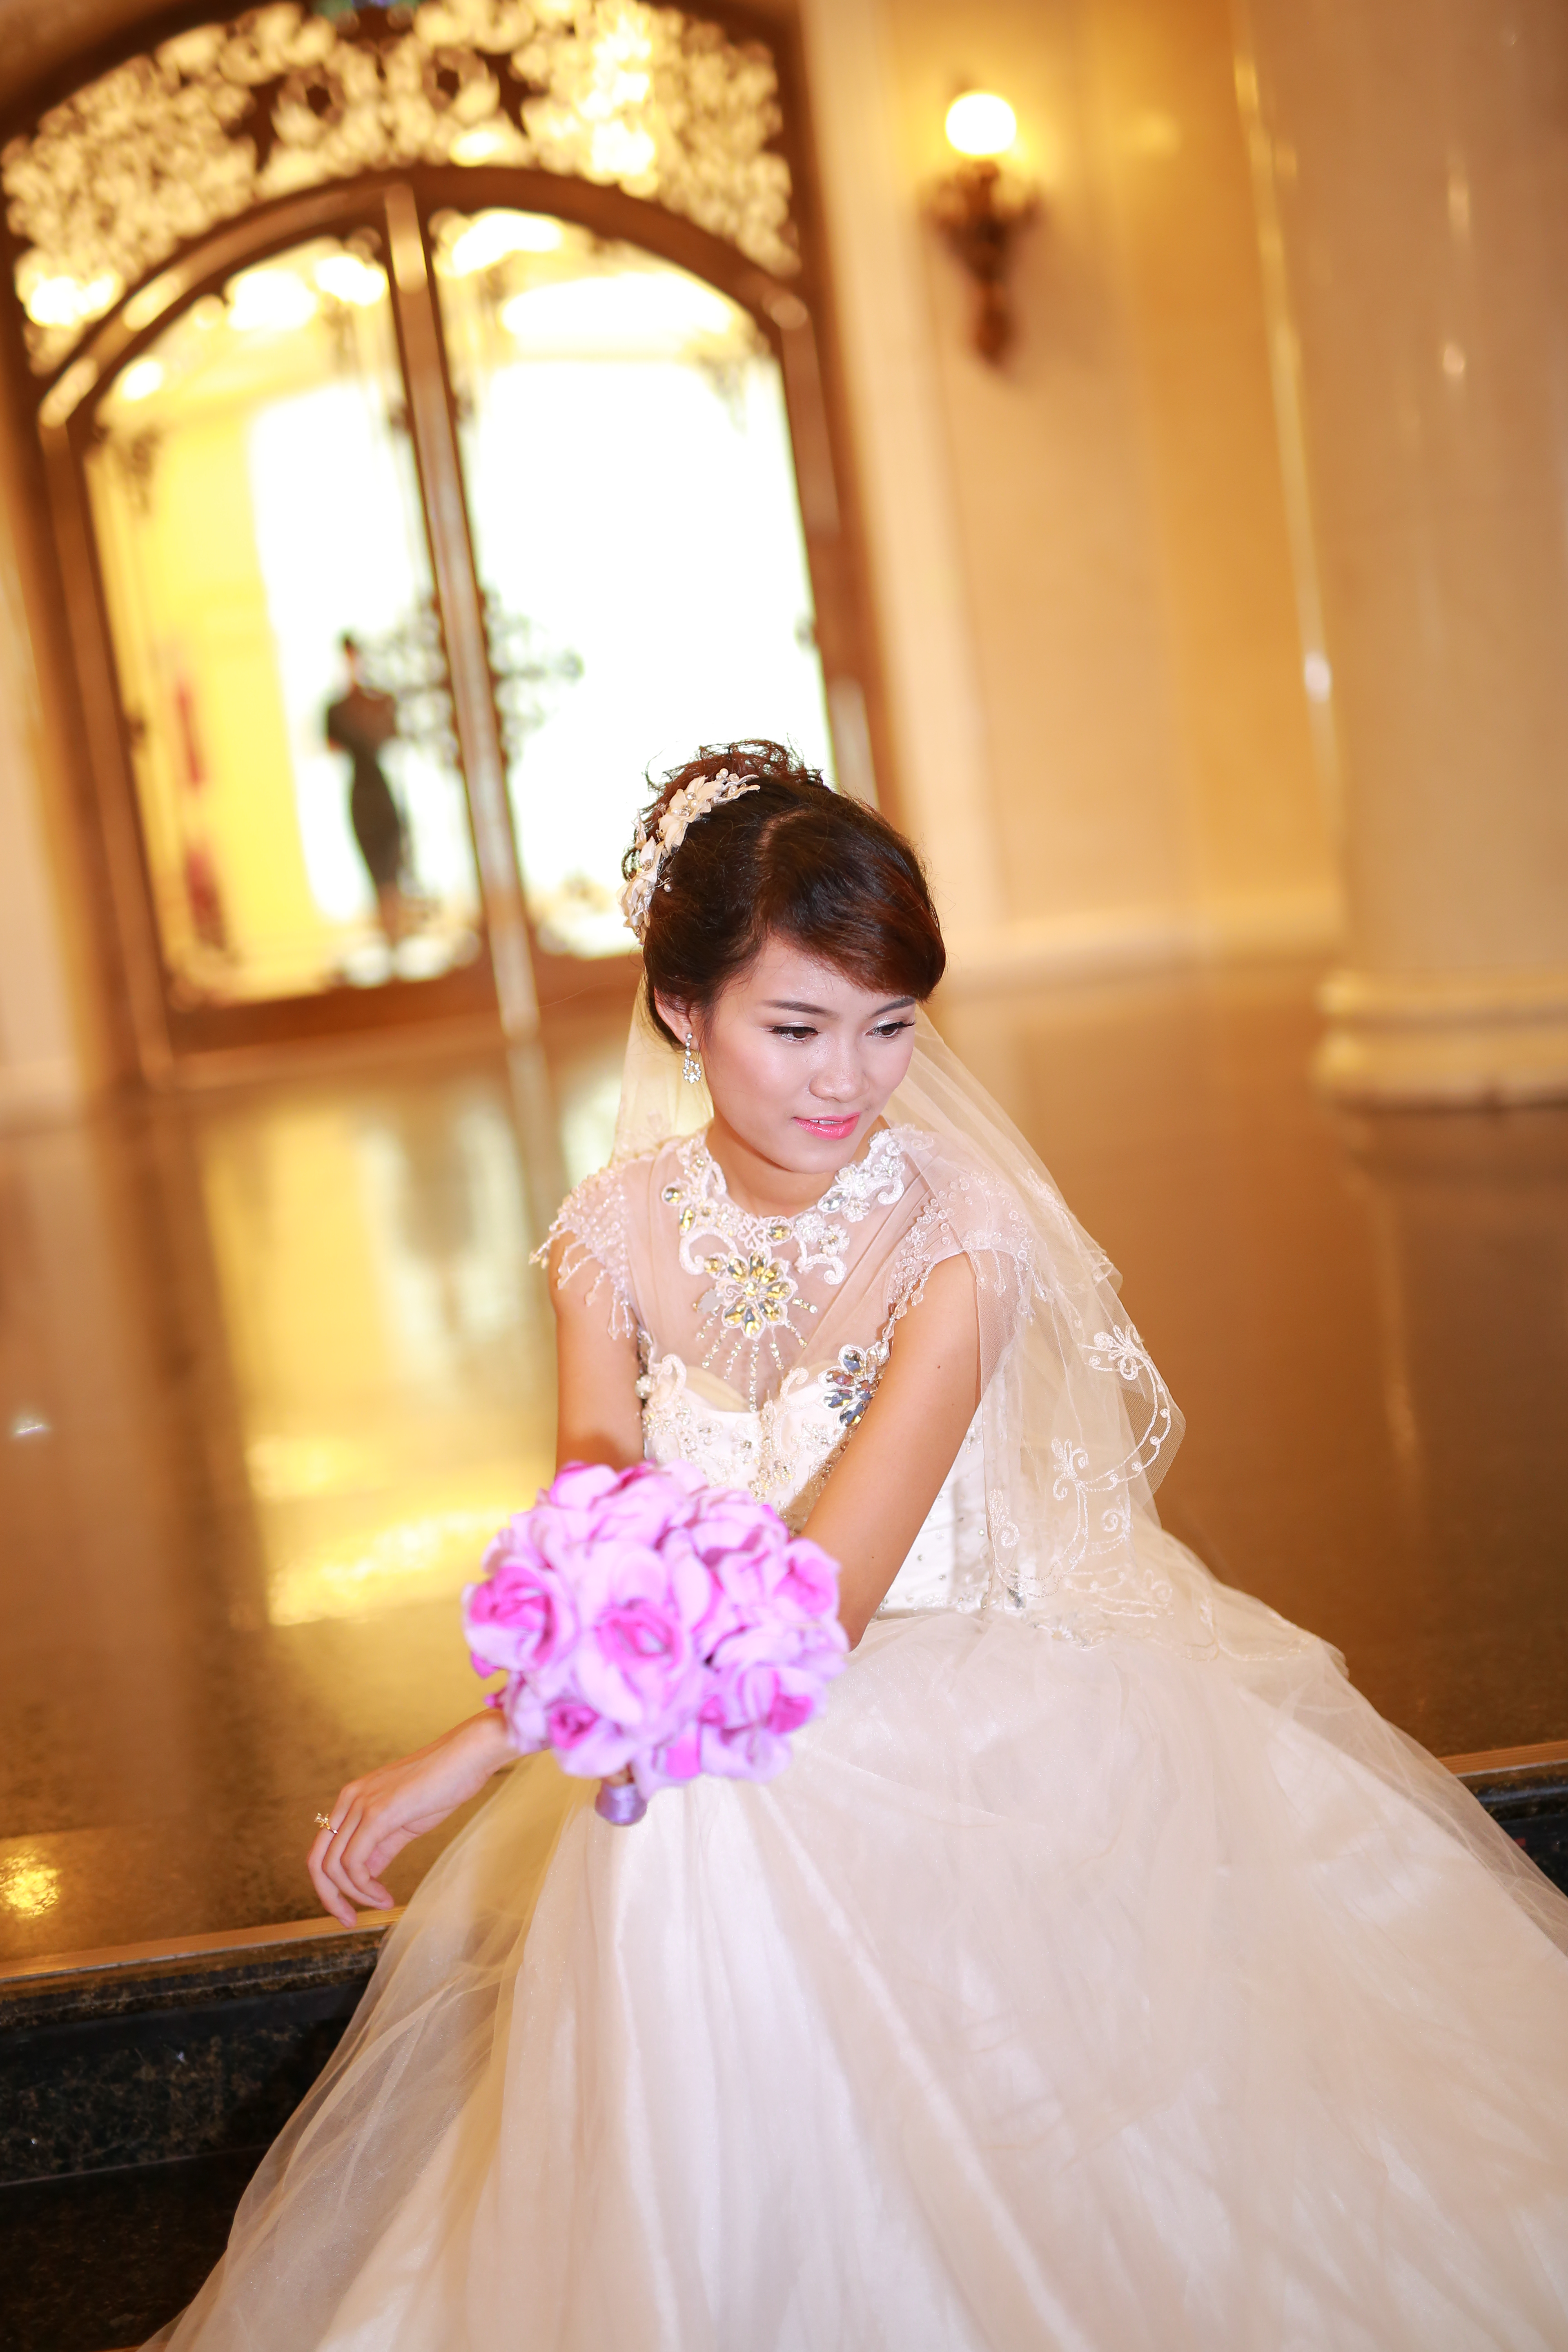 Bride, Flowers, Happy, Love, Marriage, HQ Photo